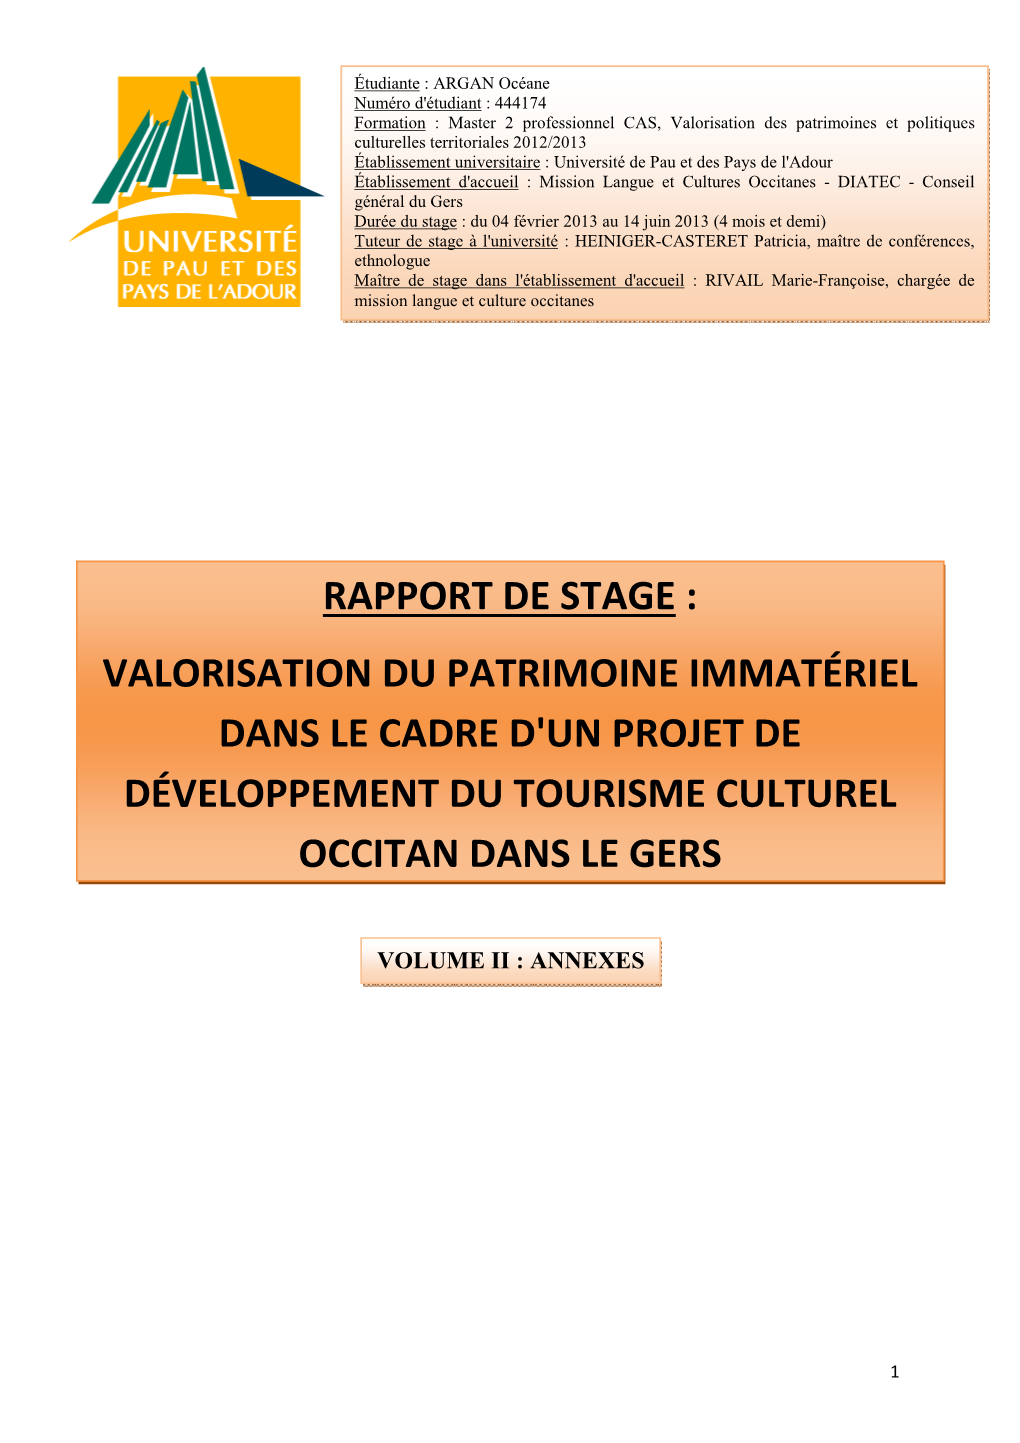 Rapport De Stage, Volume 2, Annexes